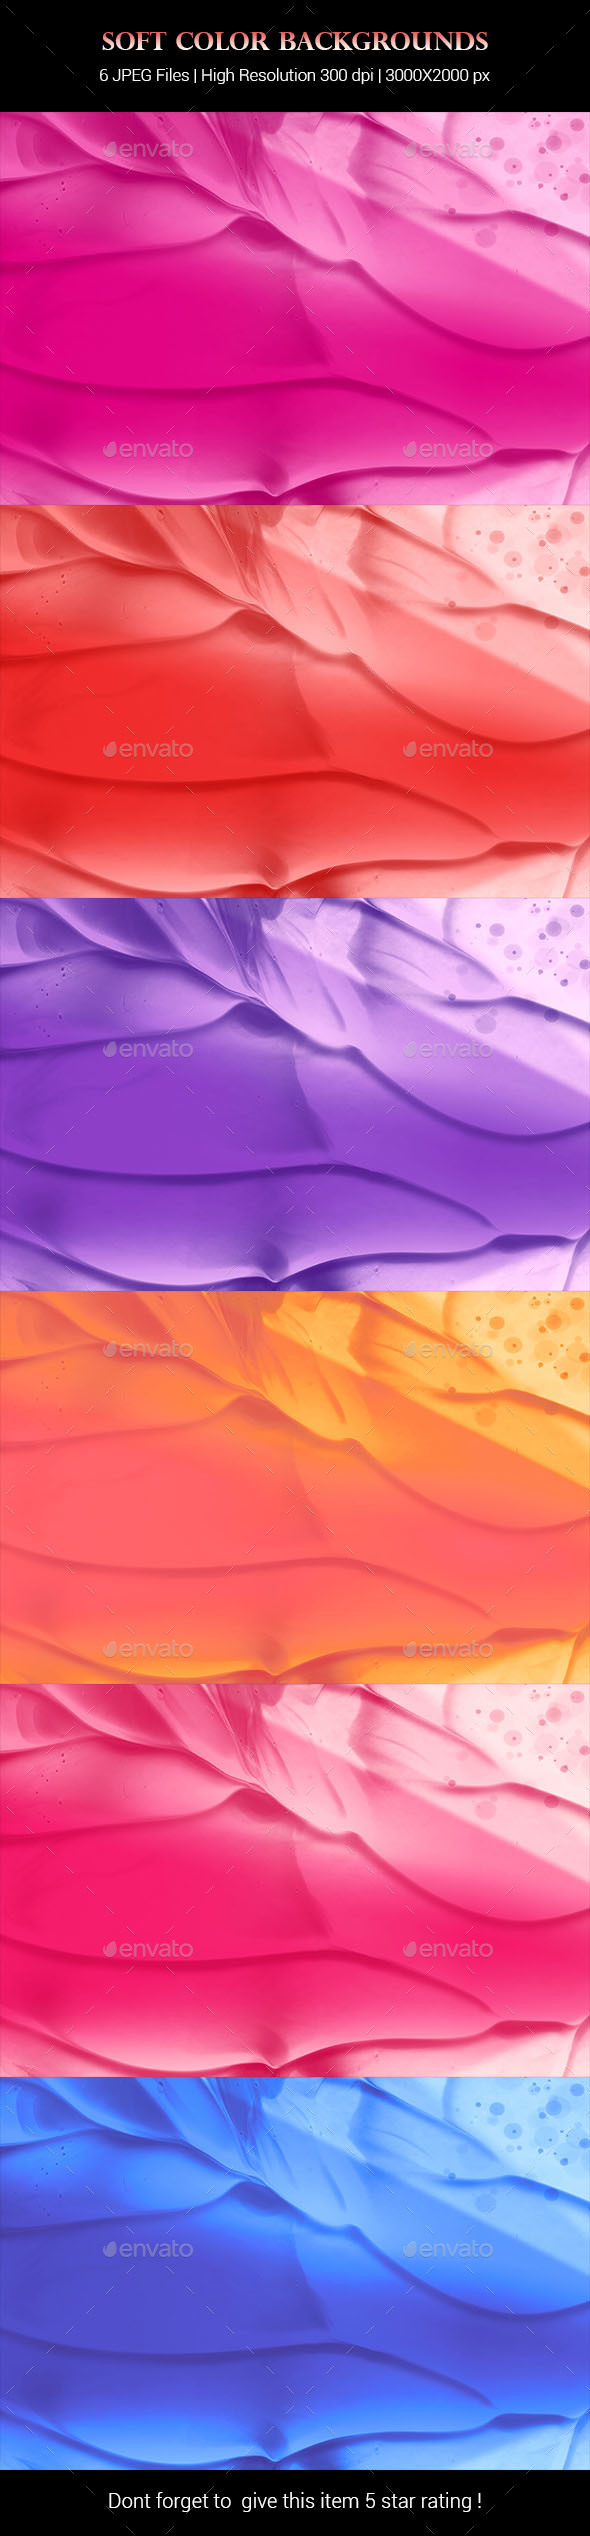 Soft Color Backgrounds by ilhampas | GraphicRiver